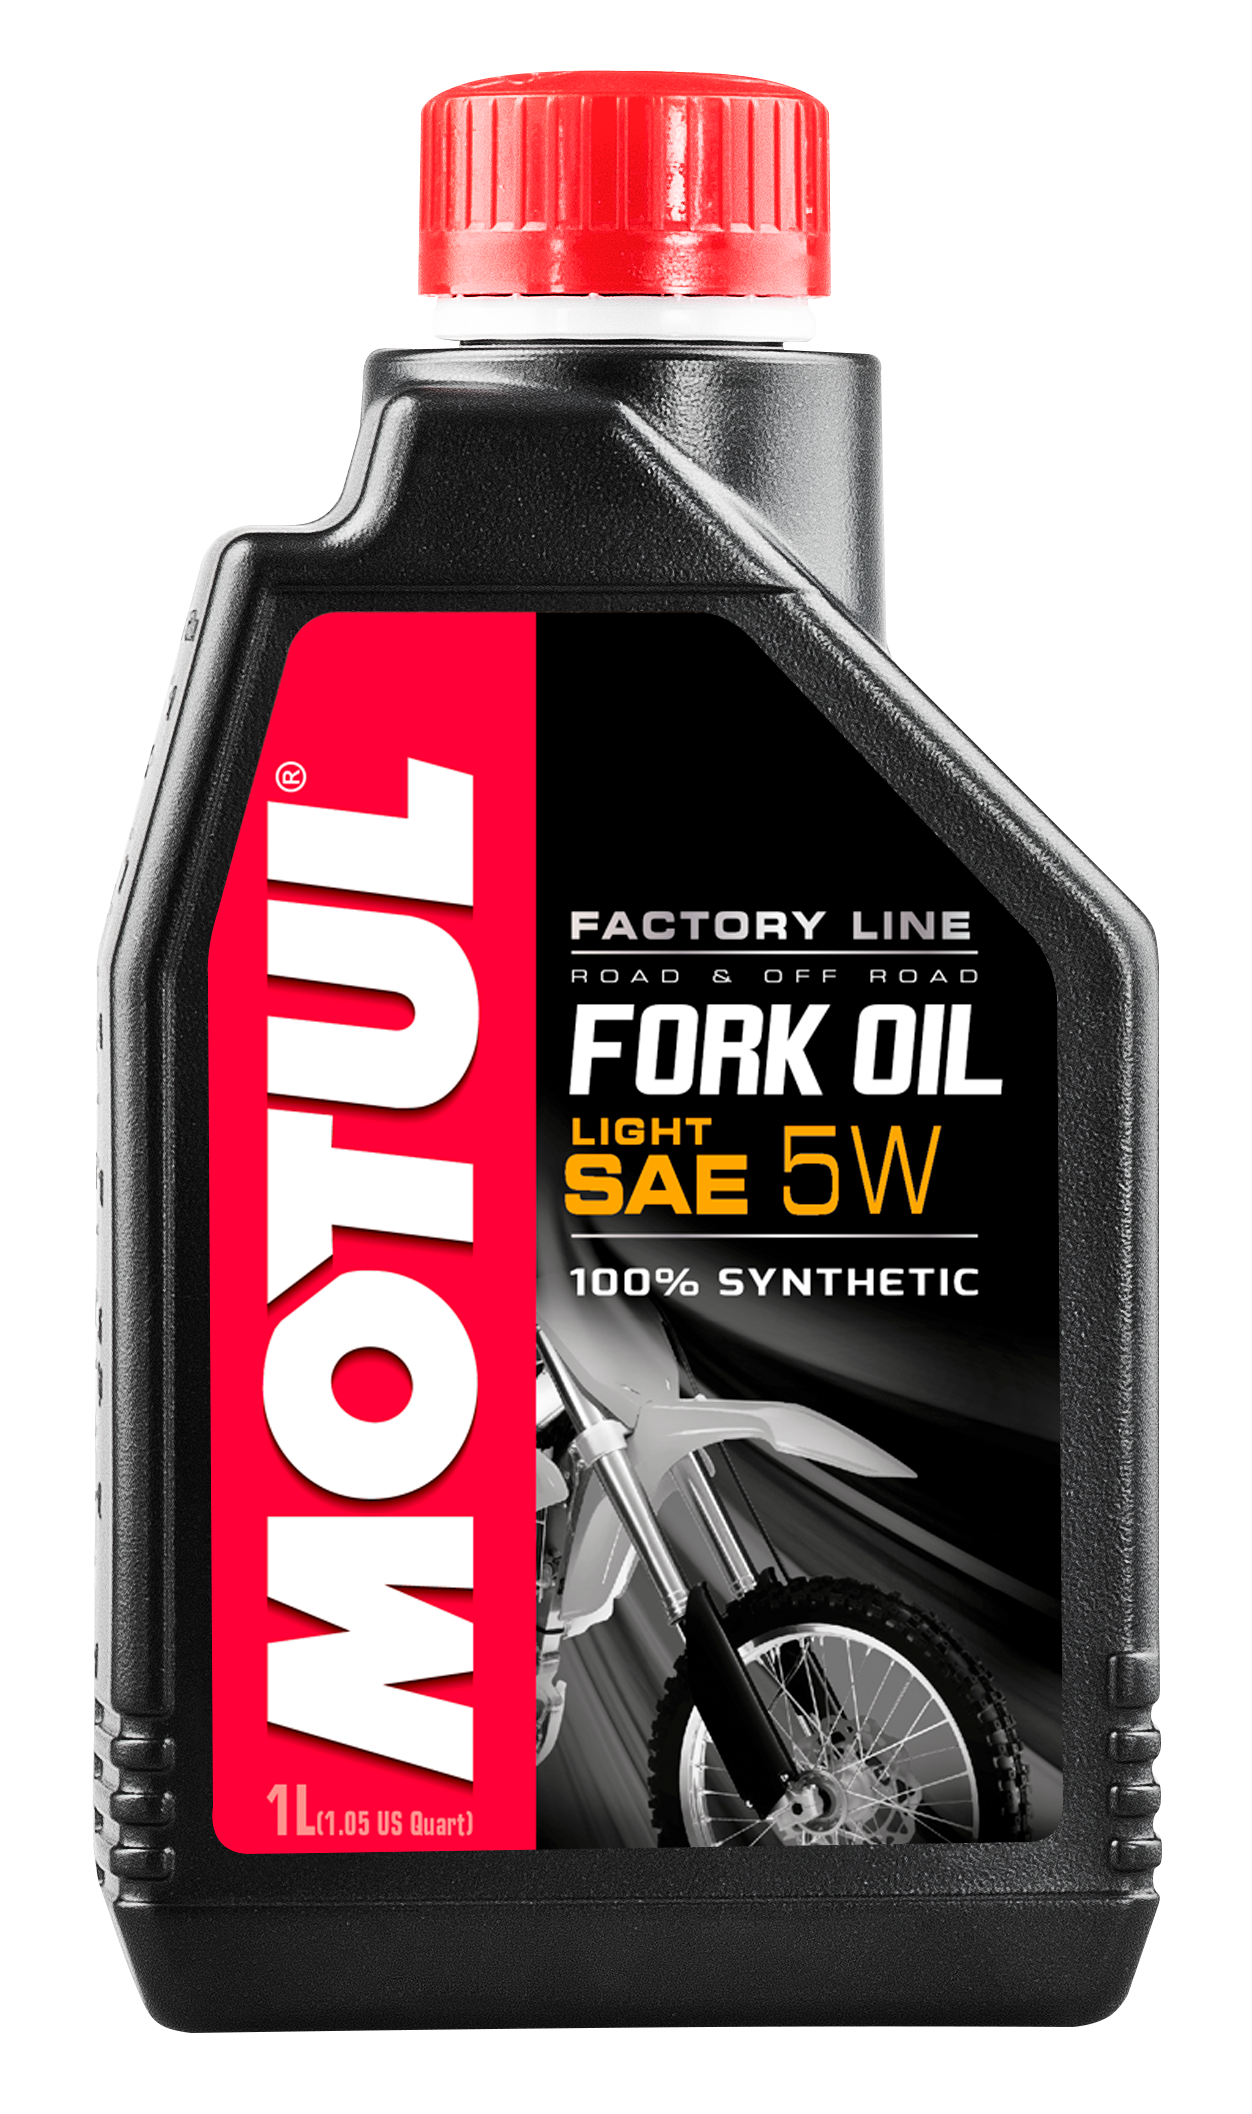 Motul Forkoil Factory Line 5W, 1 liter